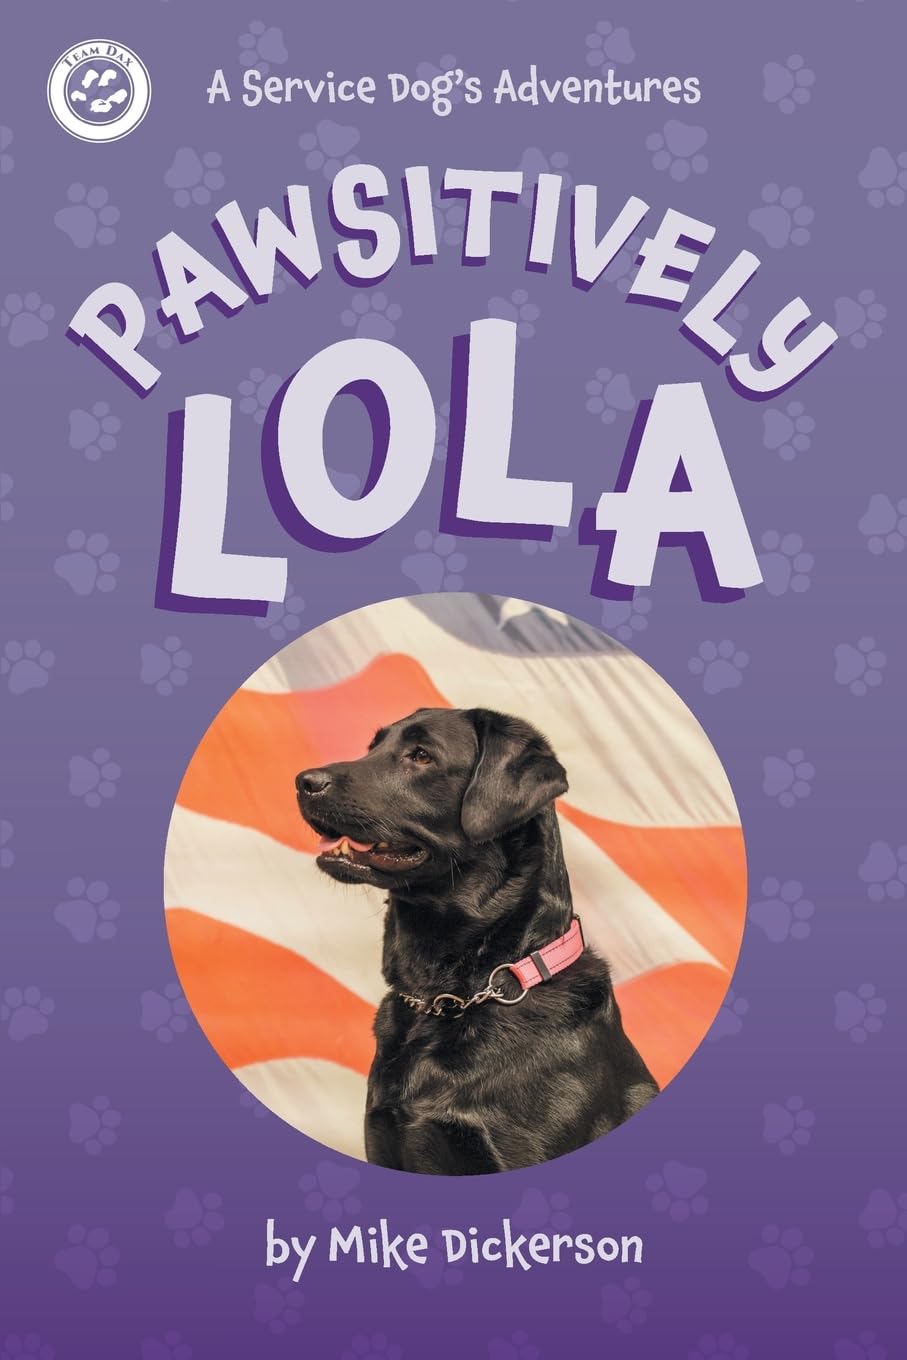 K9 Lola featured in new children’s book